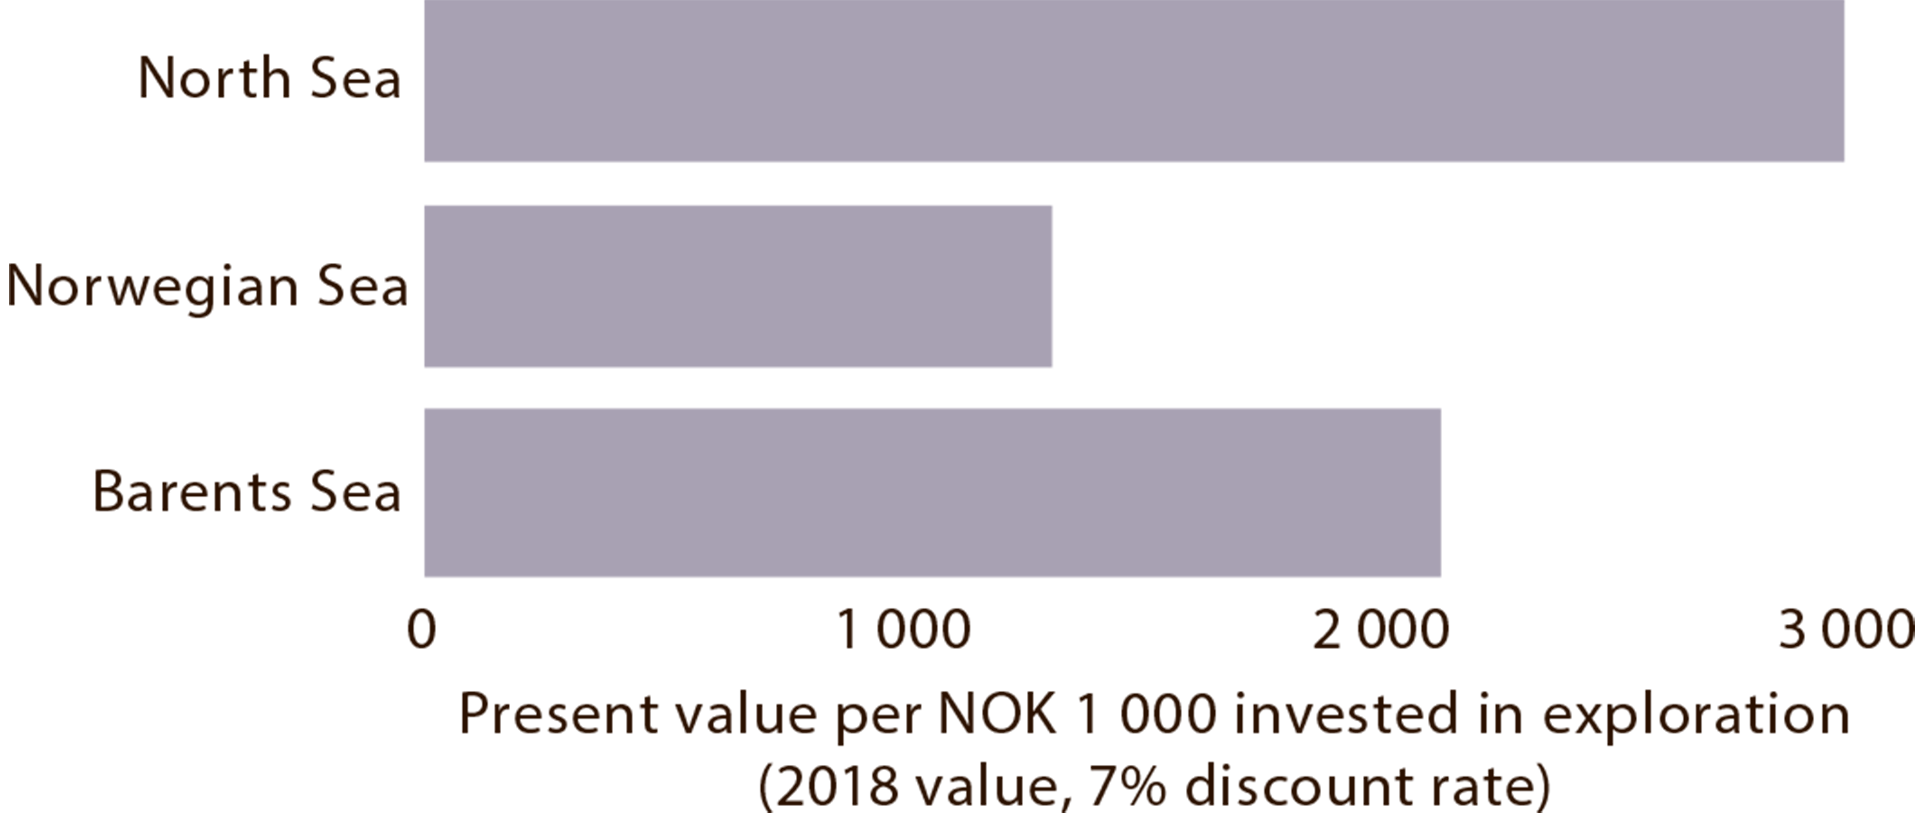 Figure 4.8 Present value (seven per cent discount rate) per NOK 1 000 spent on exploration.